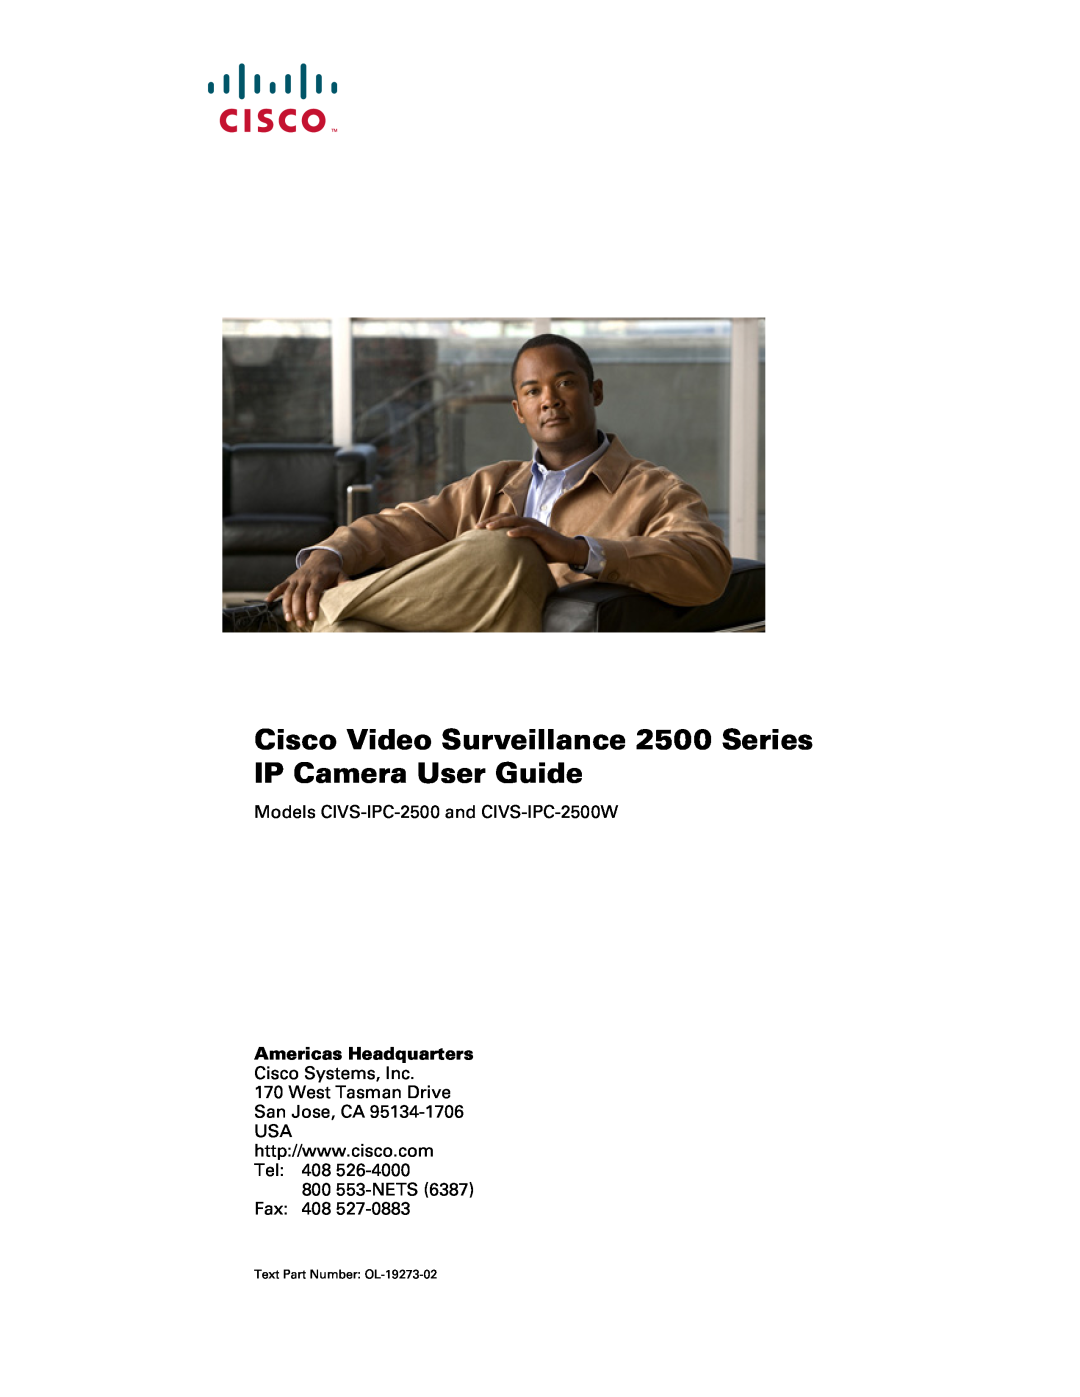 Cisco Systems CIVS-IPC-2500 manual Americas Headquarters, Cisco Video Surveillance 2500 Series IP Camera User Guide 